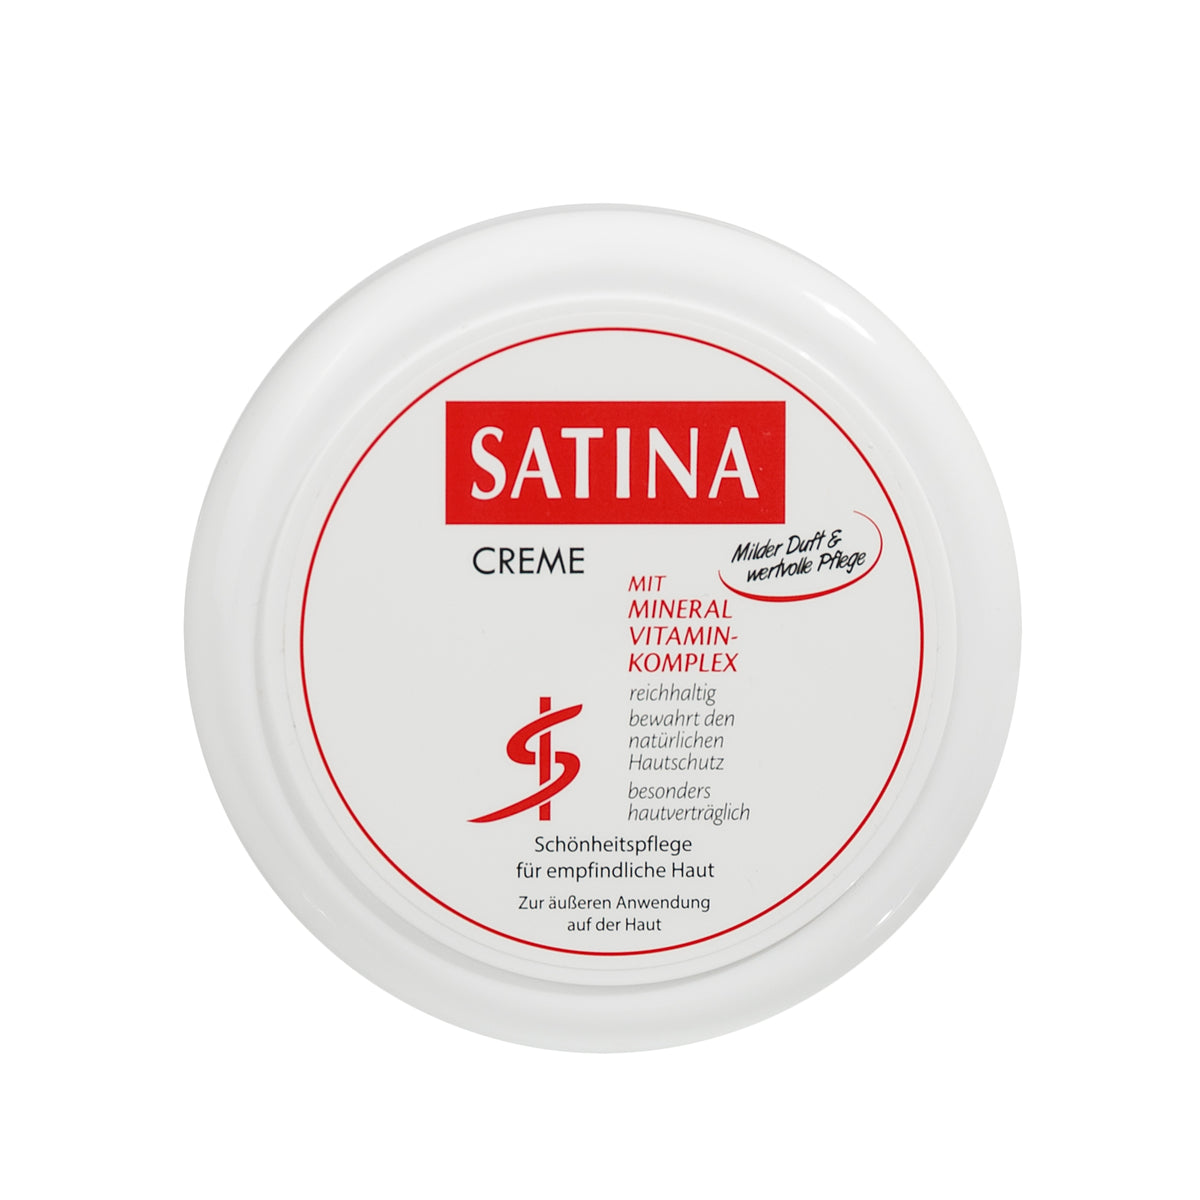 Primary Image of Satina Skin Cream